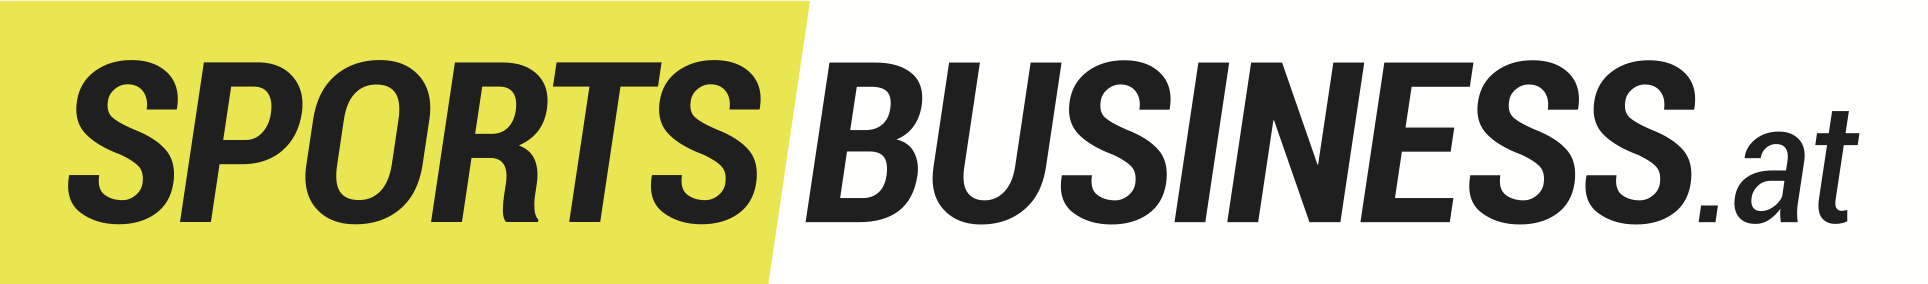 sportsbusiness_Logo.png